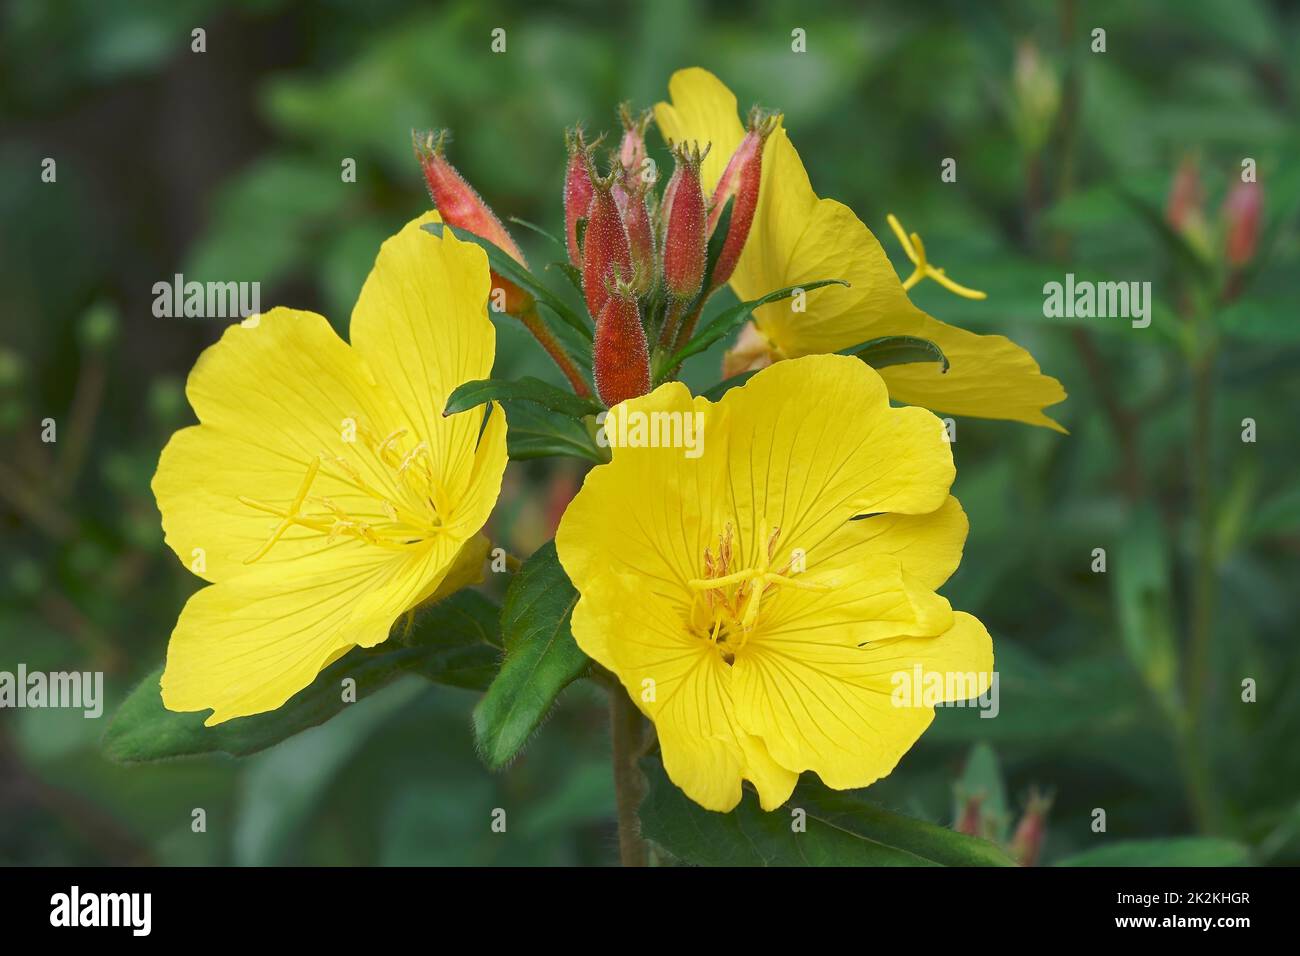 Close-up image of Common Evening primrose flowers Stock Photo